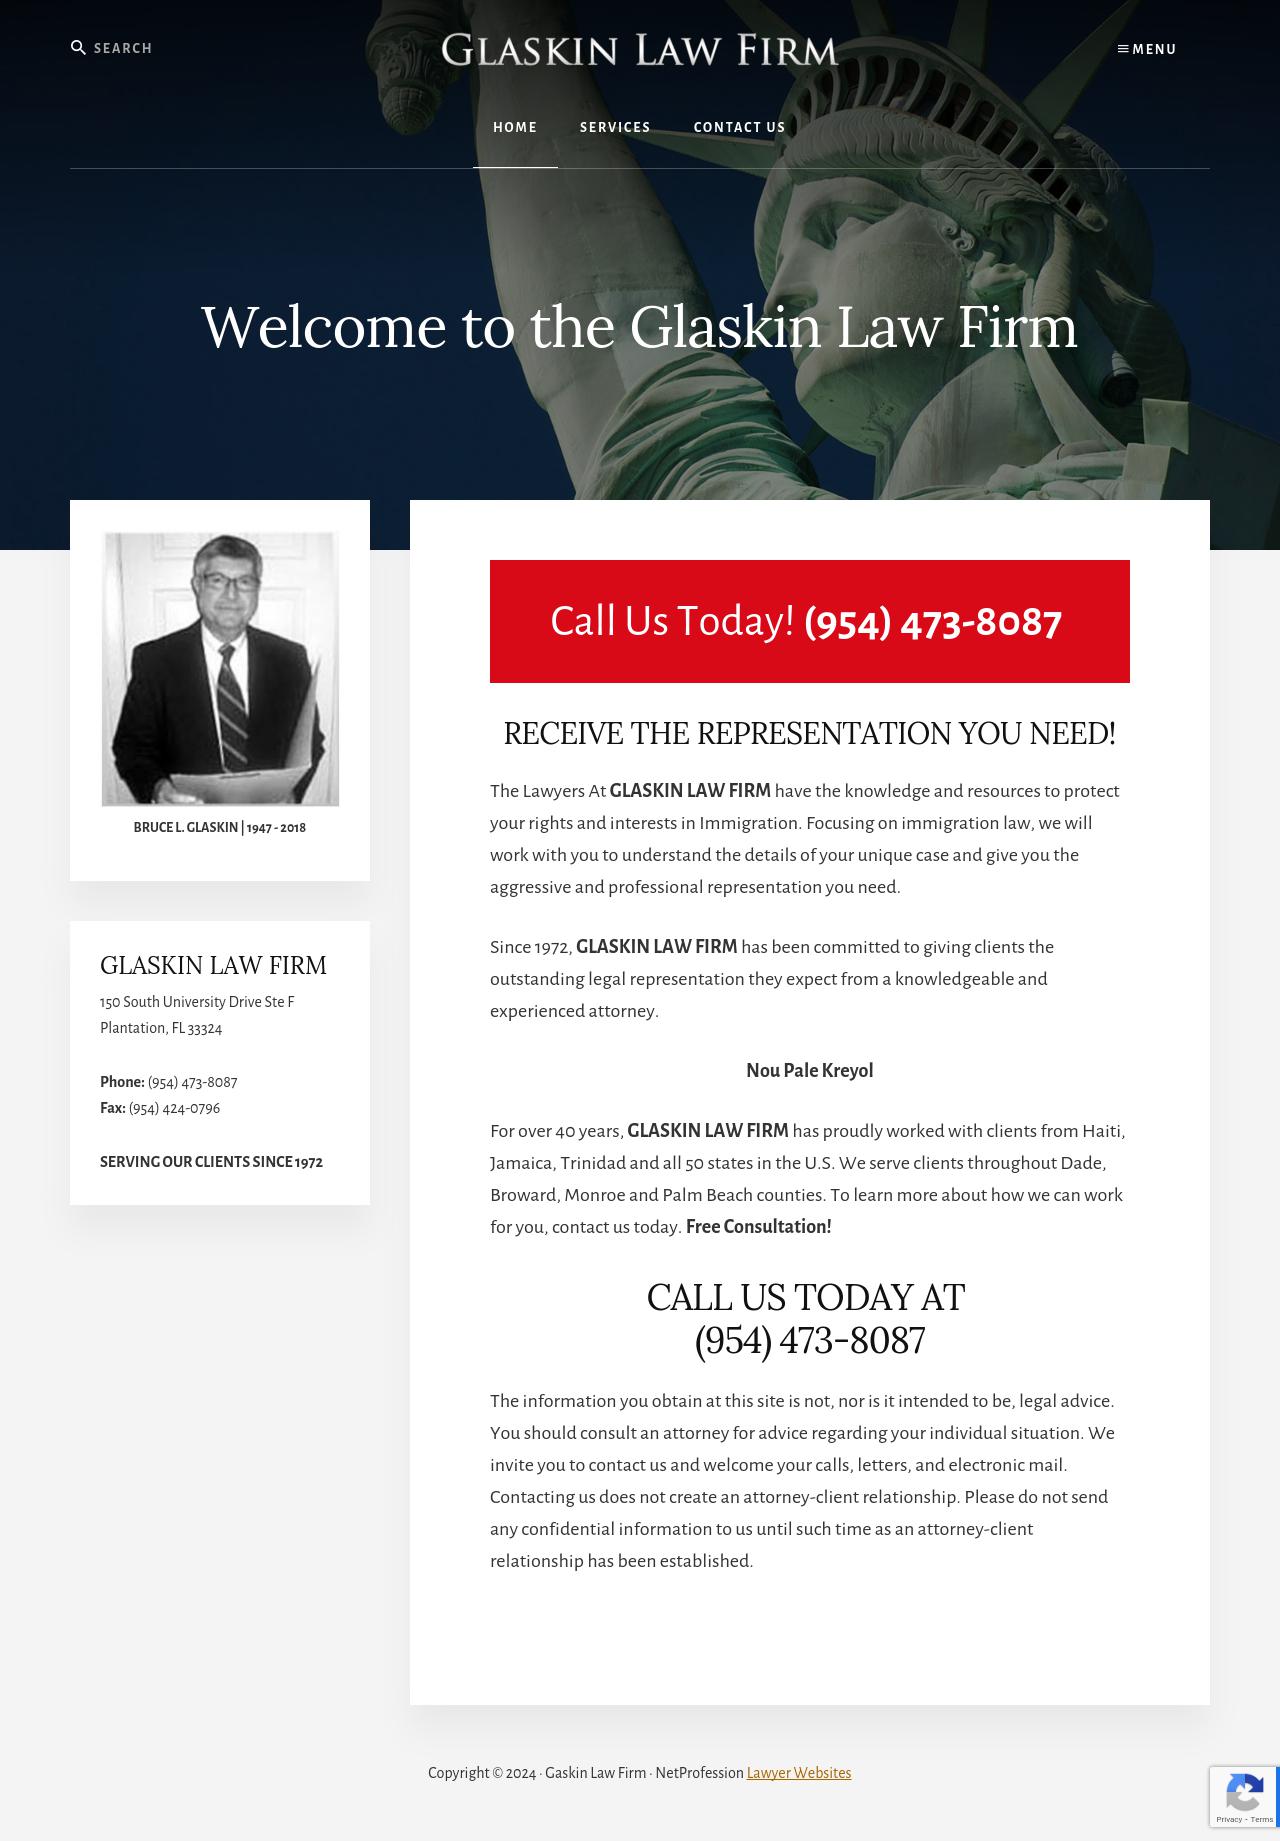 Glaskin, Bruce L - Plantation FL Lawyers